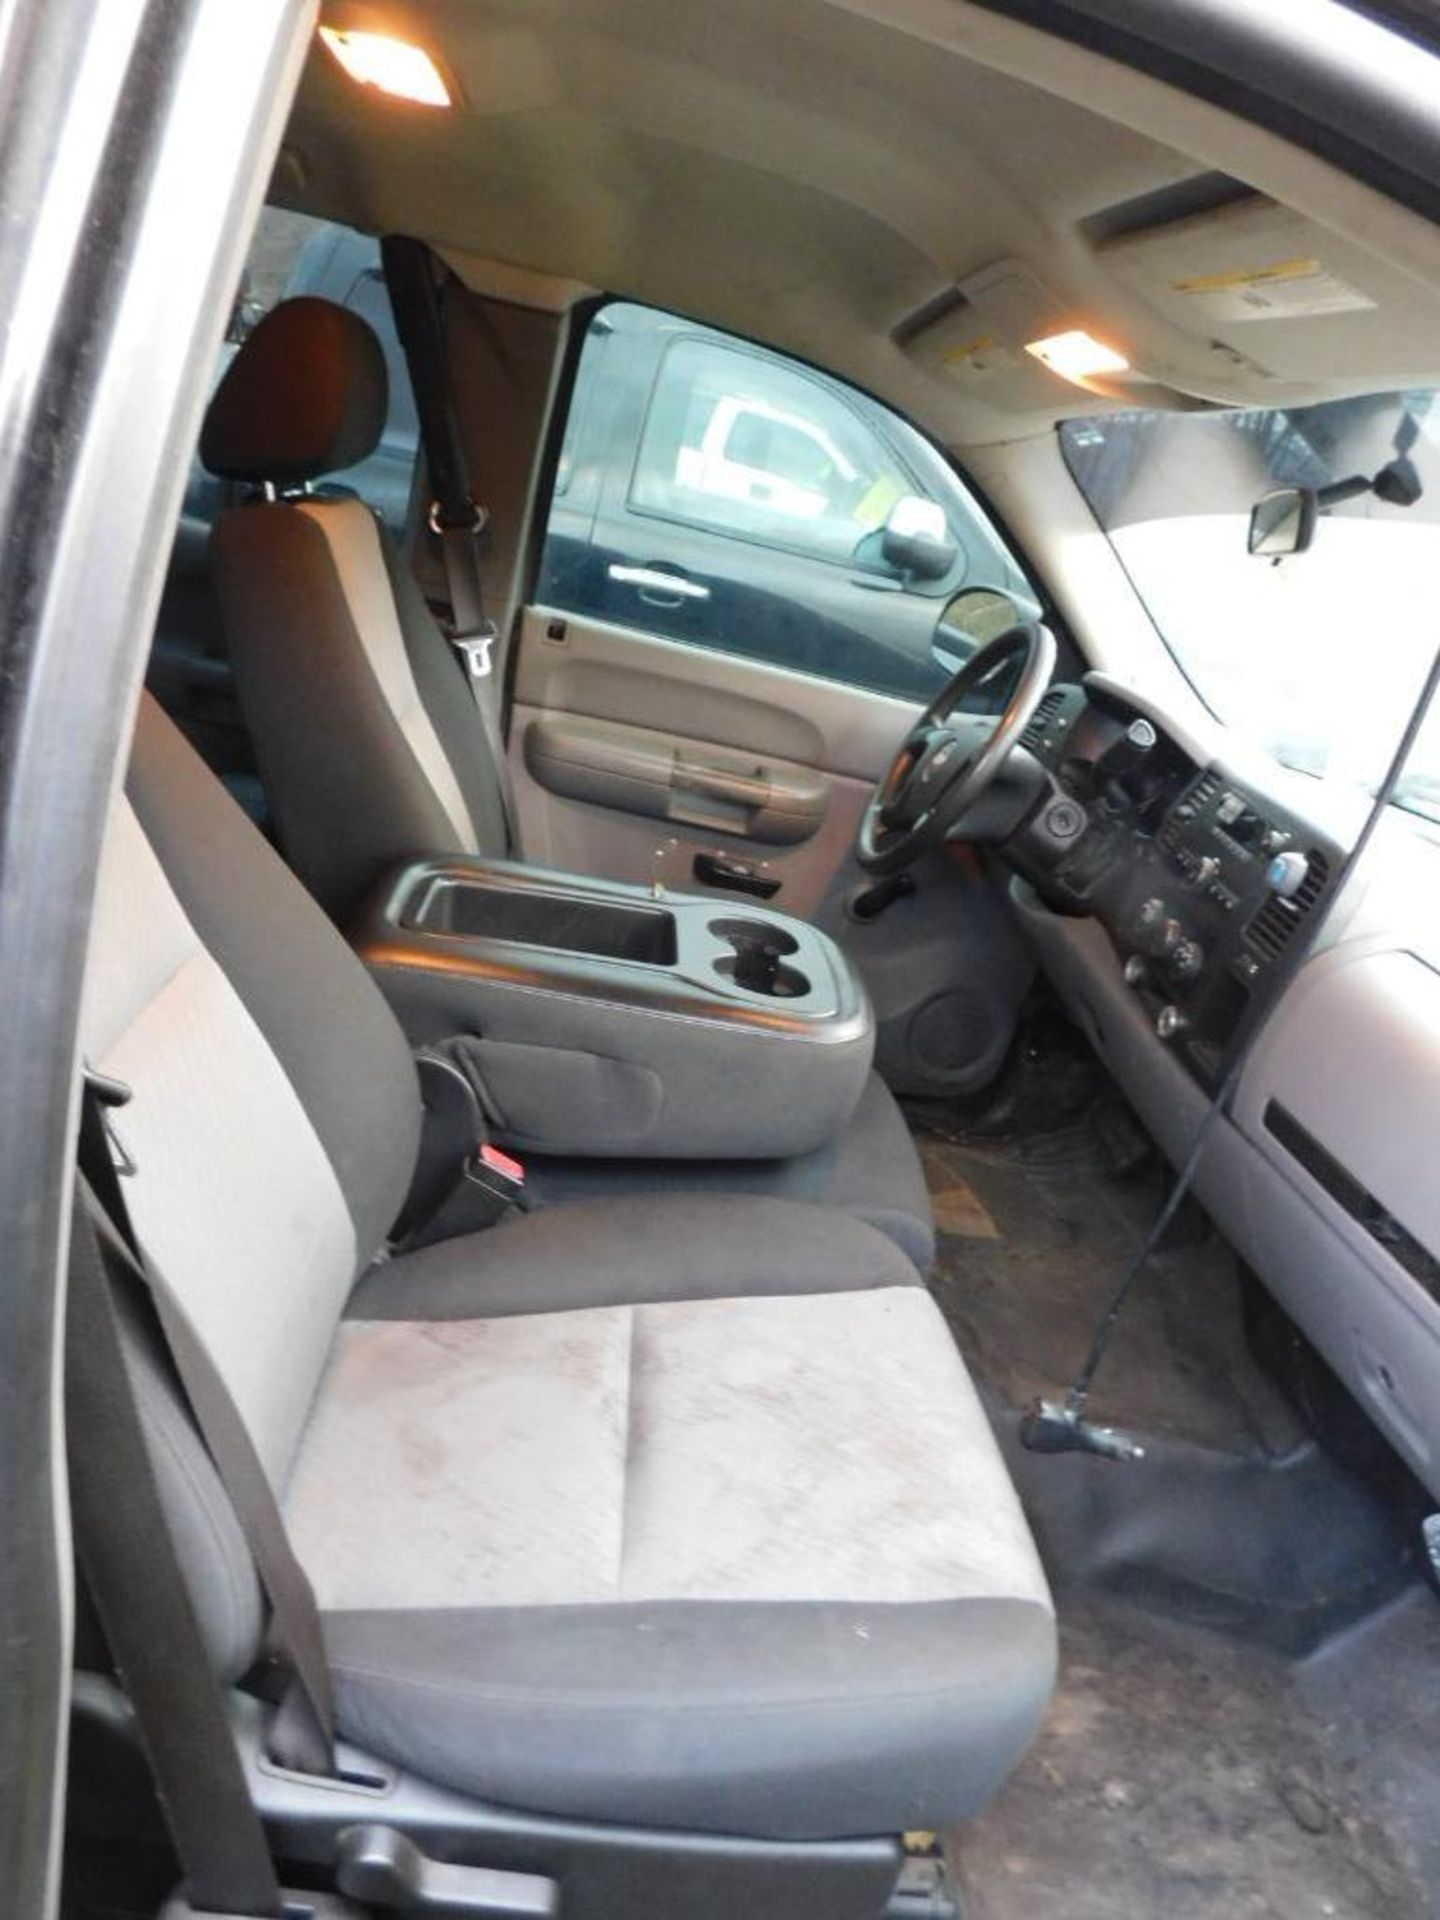 2007 Chevy Silverado Extended Cab, 2-Wheel Drive, 5.3 Liter Vortex, V8 Gasoline Motor, Auto, 6'6" Be - Image 10 of 11